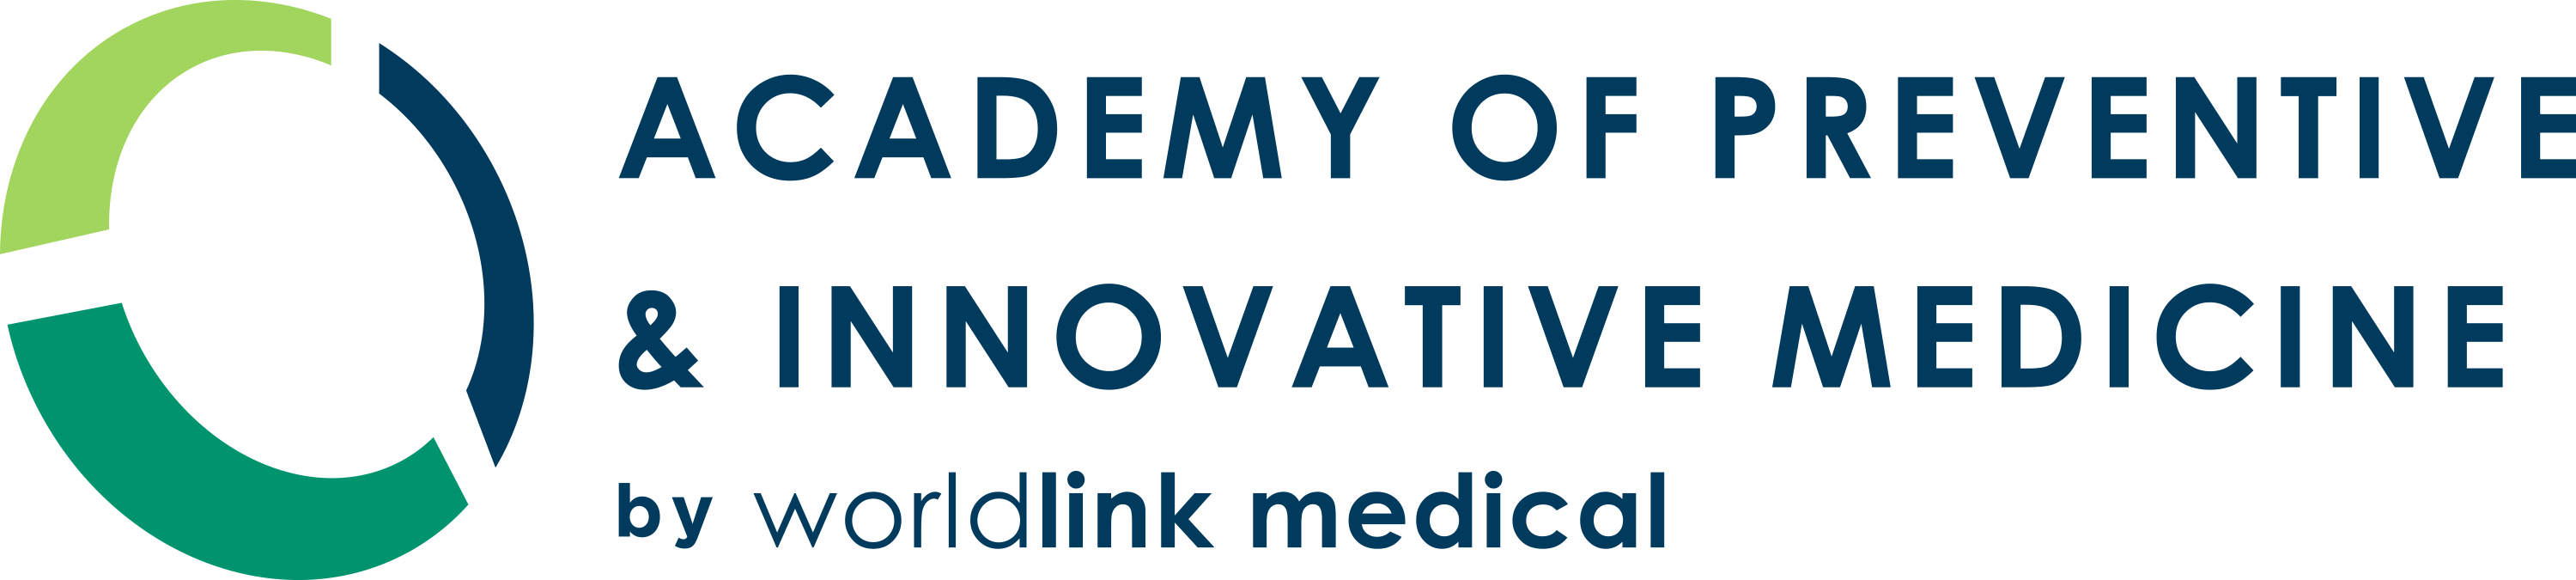 Academy of Preventative and Innovative Medicine